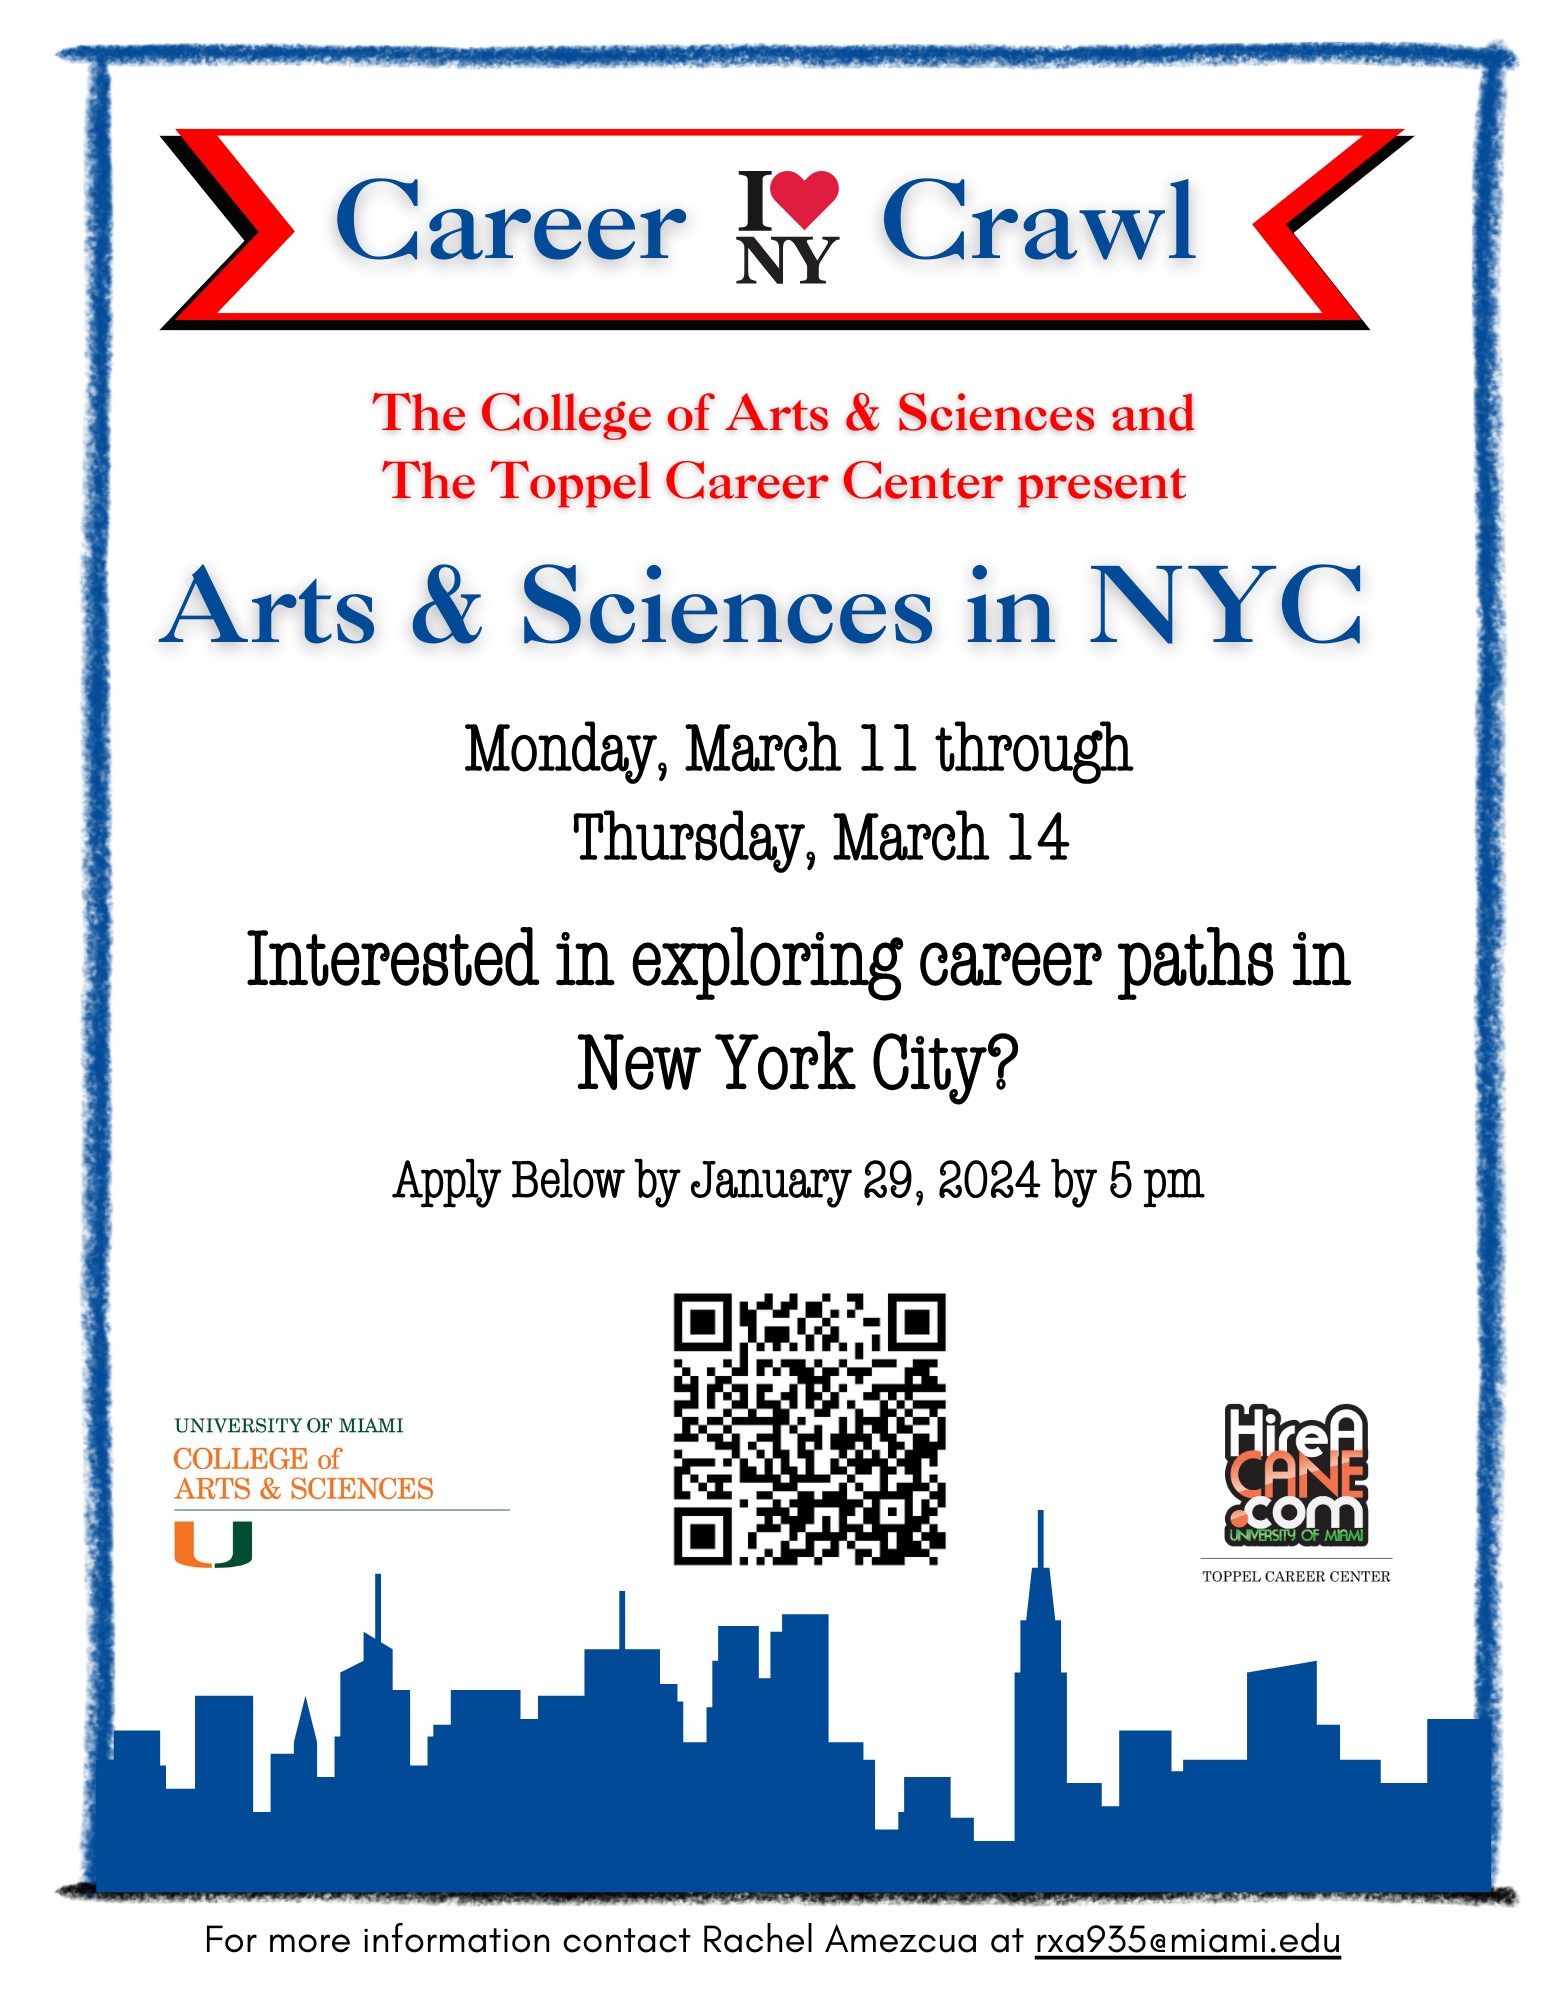 Career Crawl NYC